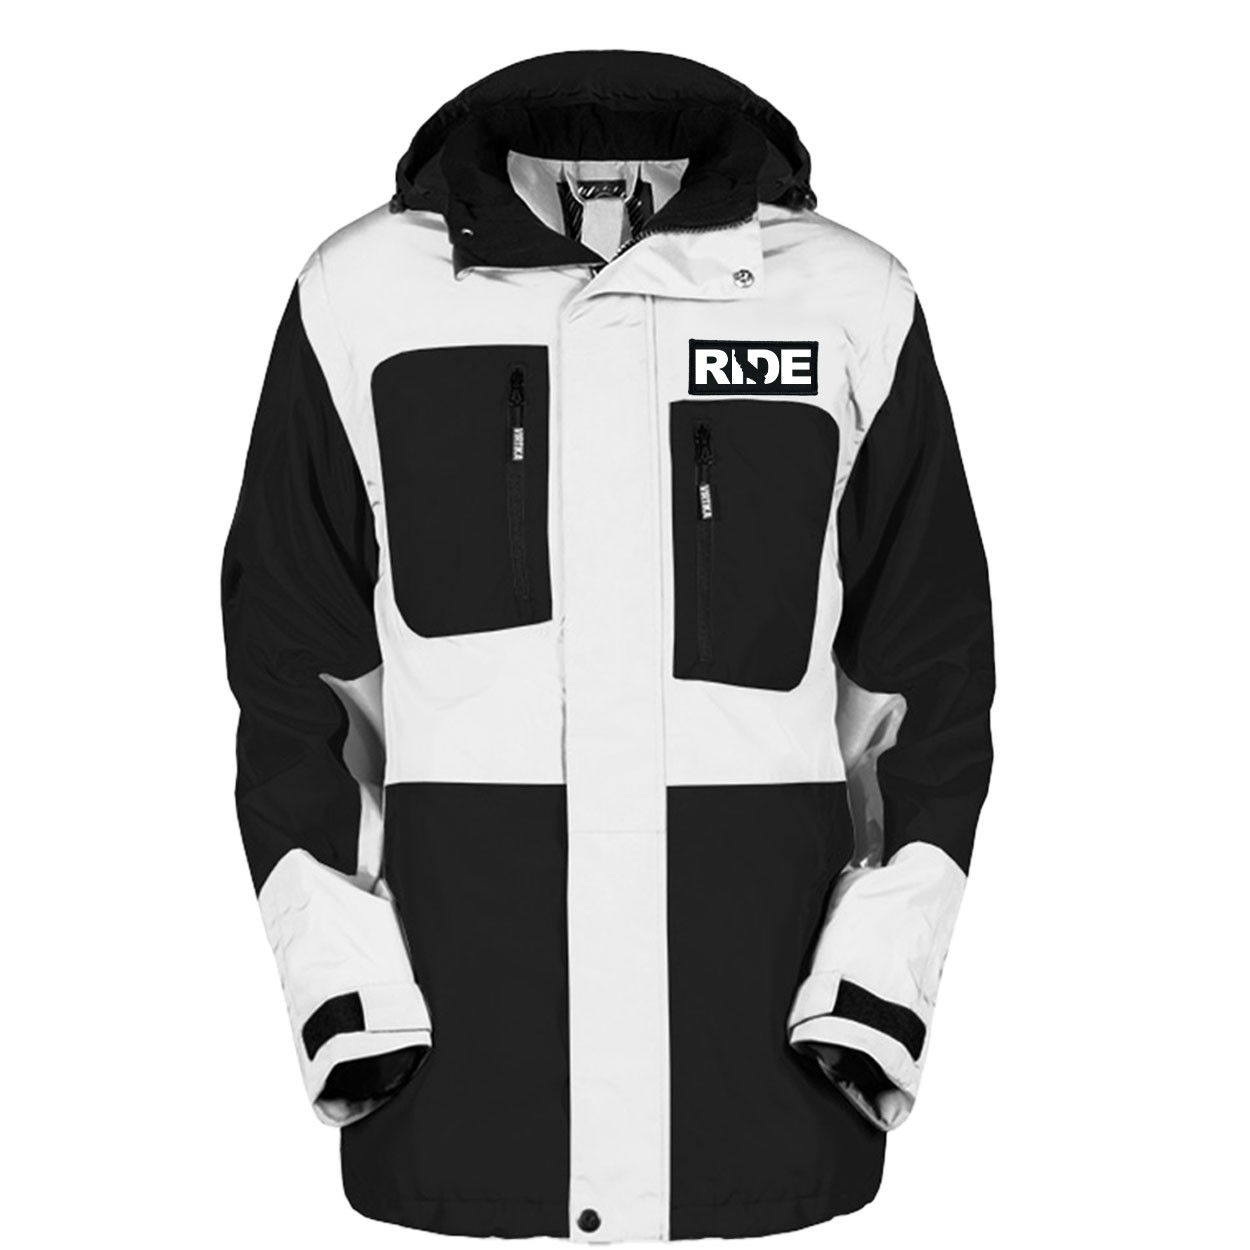 Ride California Classic Woven Patch Pro Snowboard Jacket (Black/White)